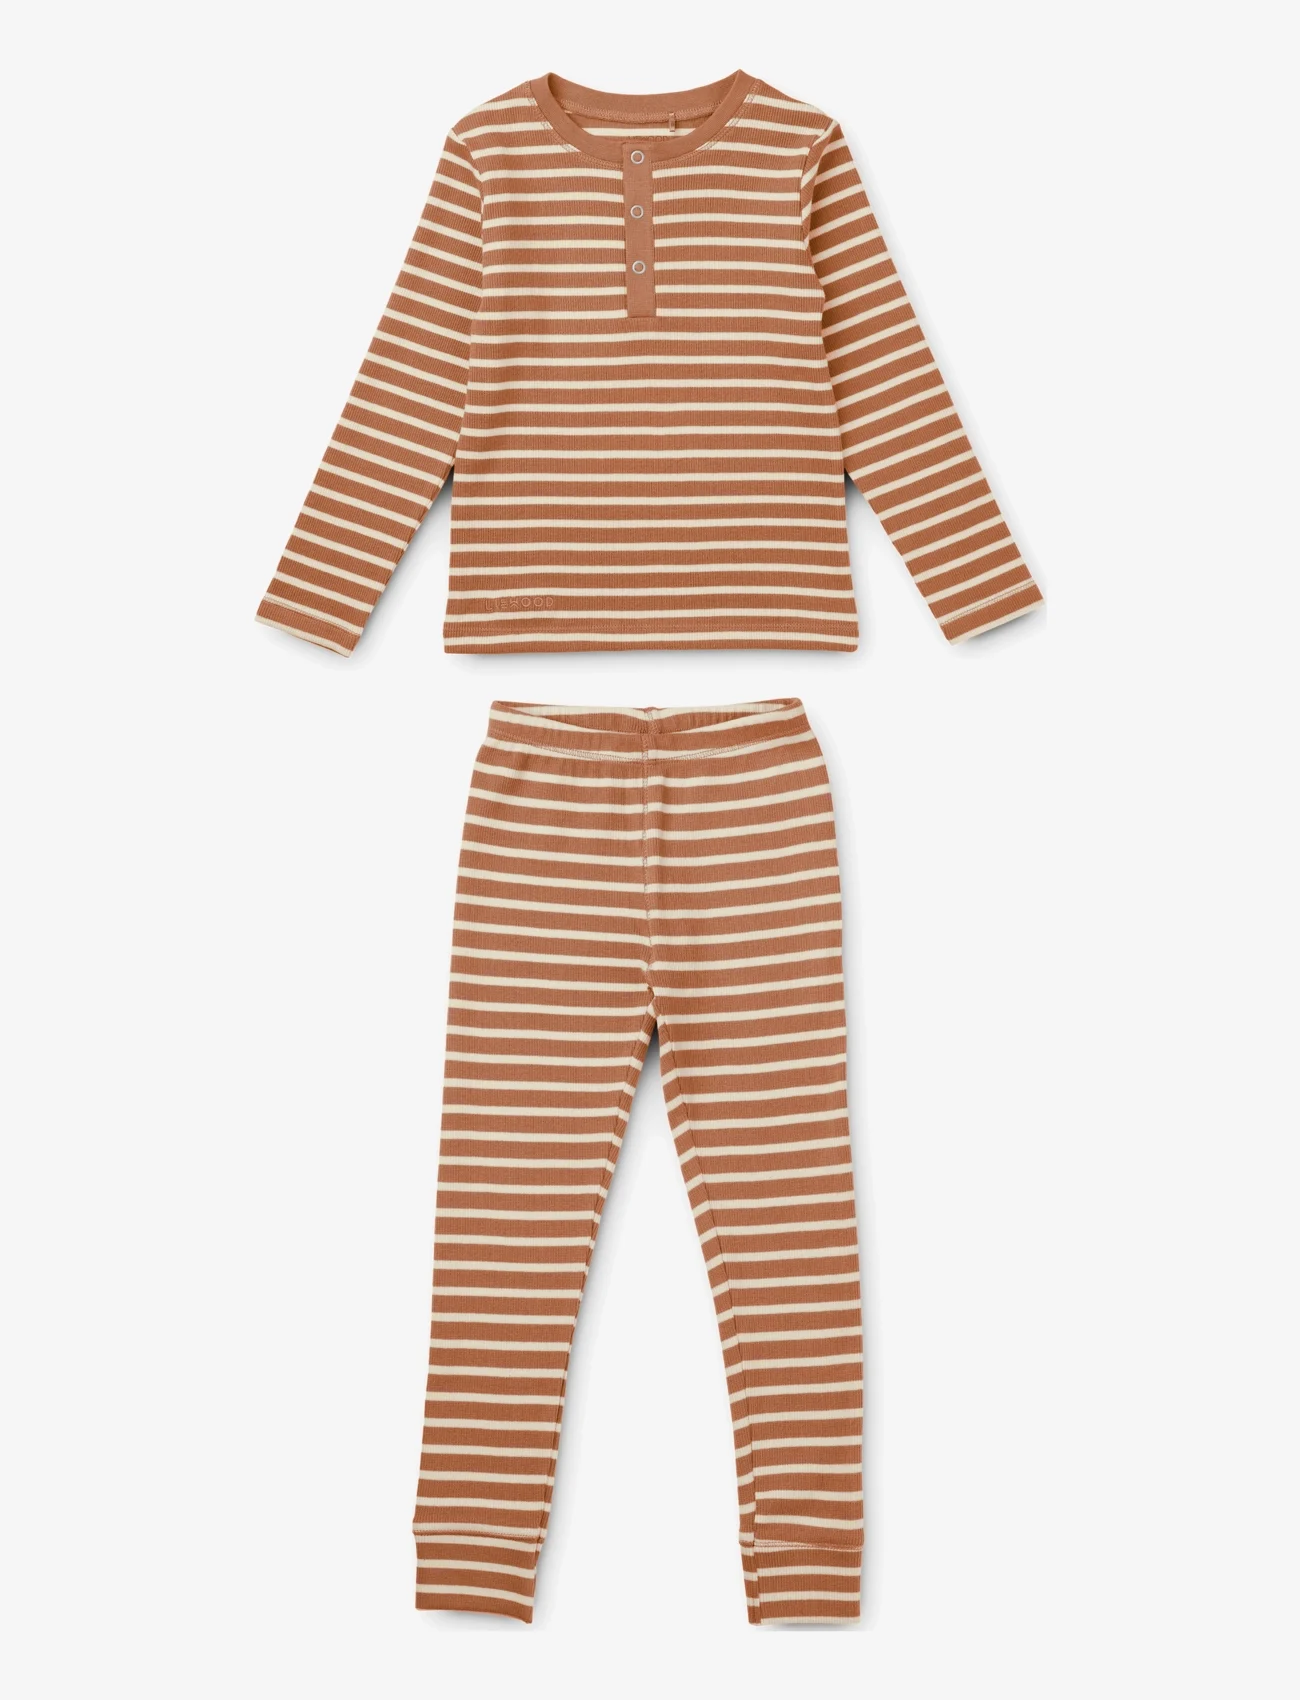 Liewood - Wilhelm pyjamas set - sets - y/d stripe - 0